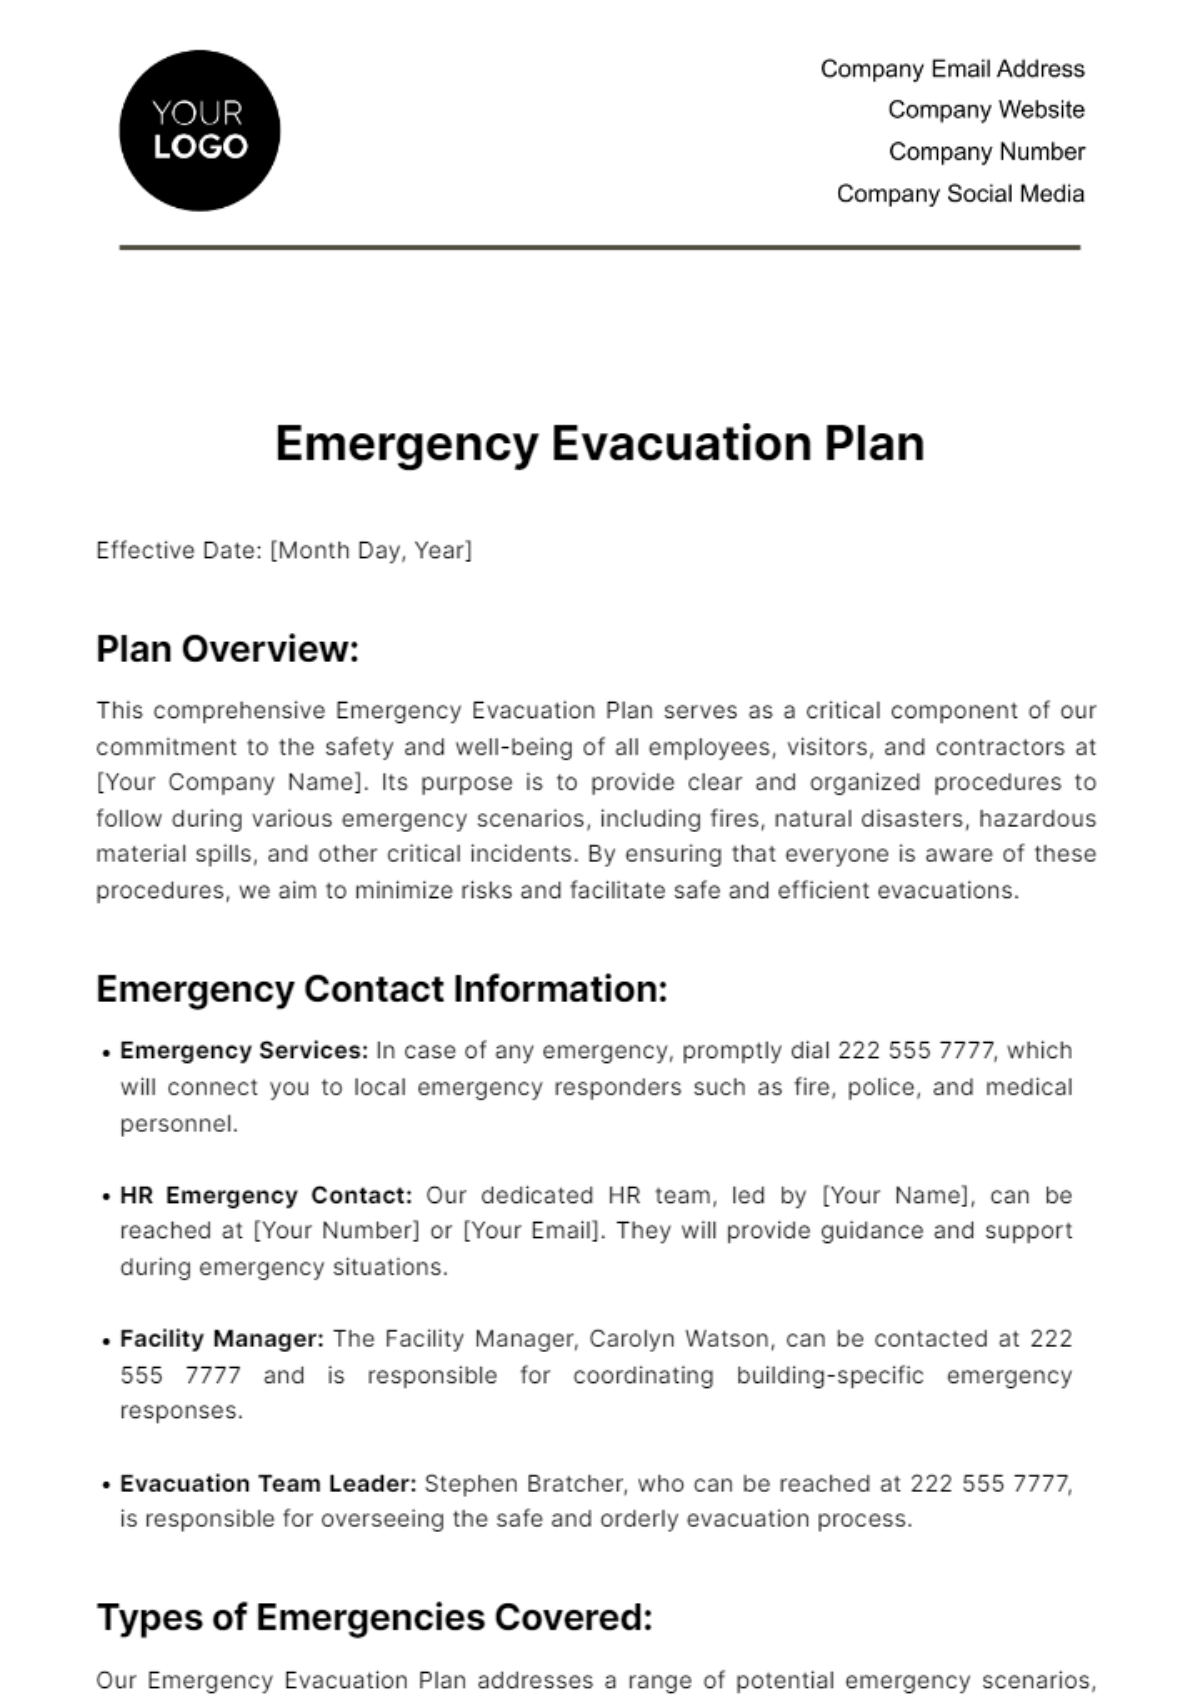 Emergency Evacuation Plan HR Template